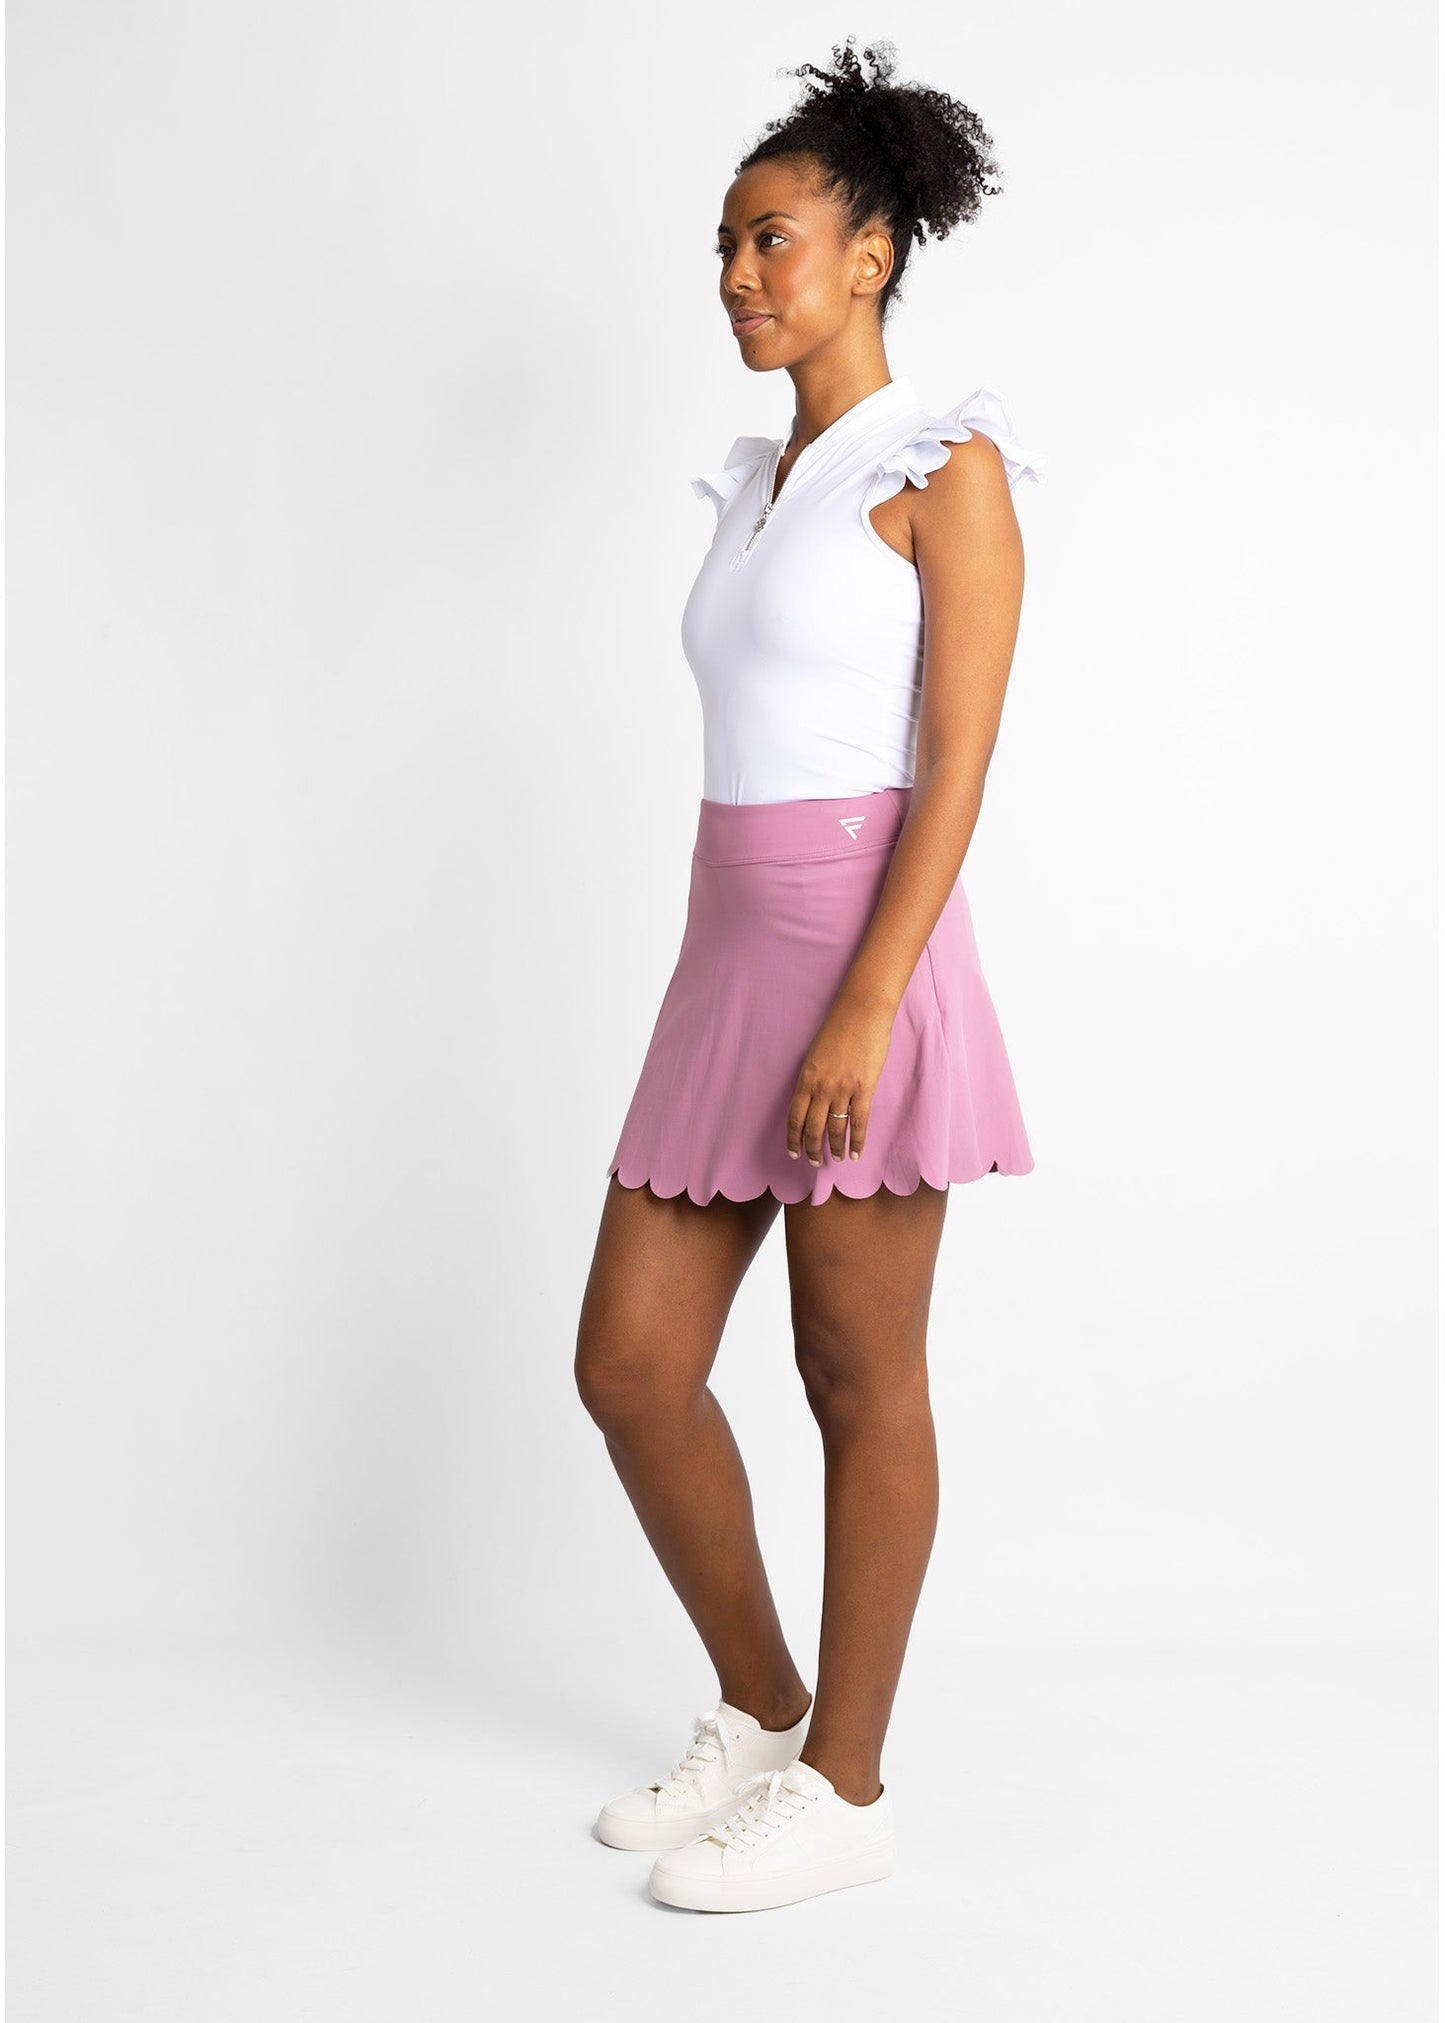 Skirts  Oalka Womens Mauve Pink Skort Skirt W Built In Shorts